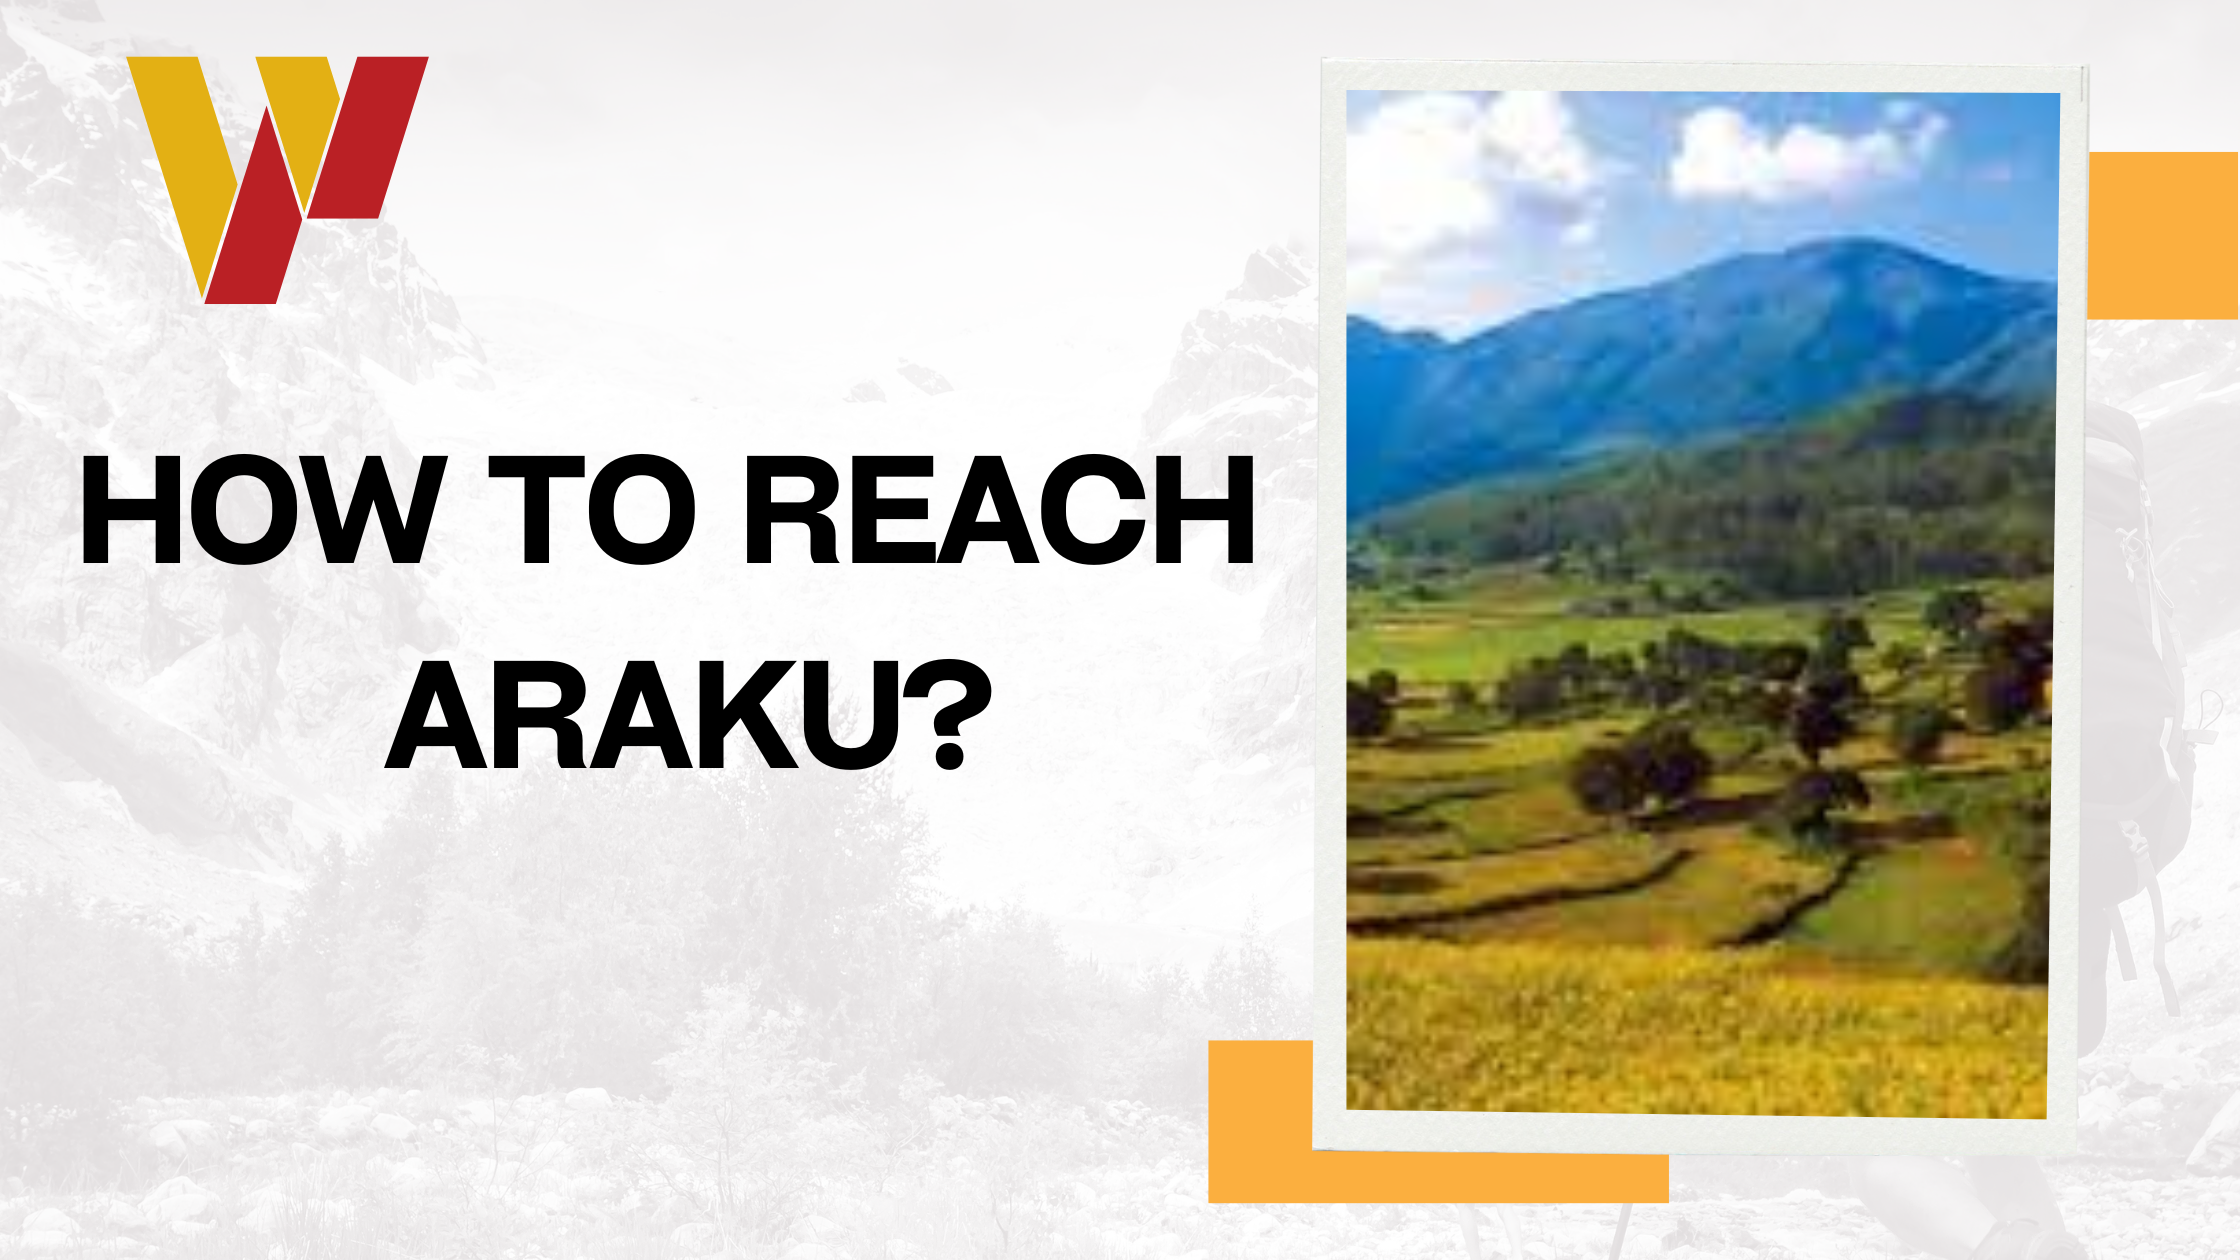 How to reach Araku